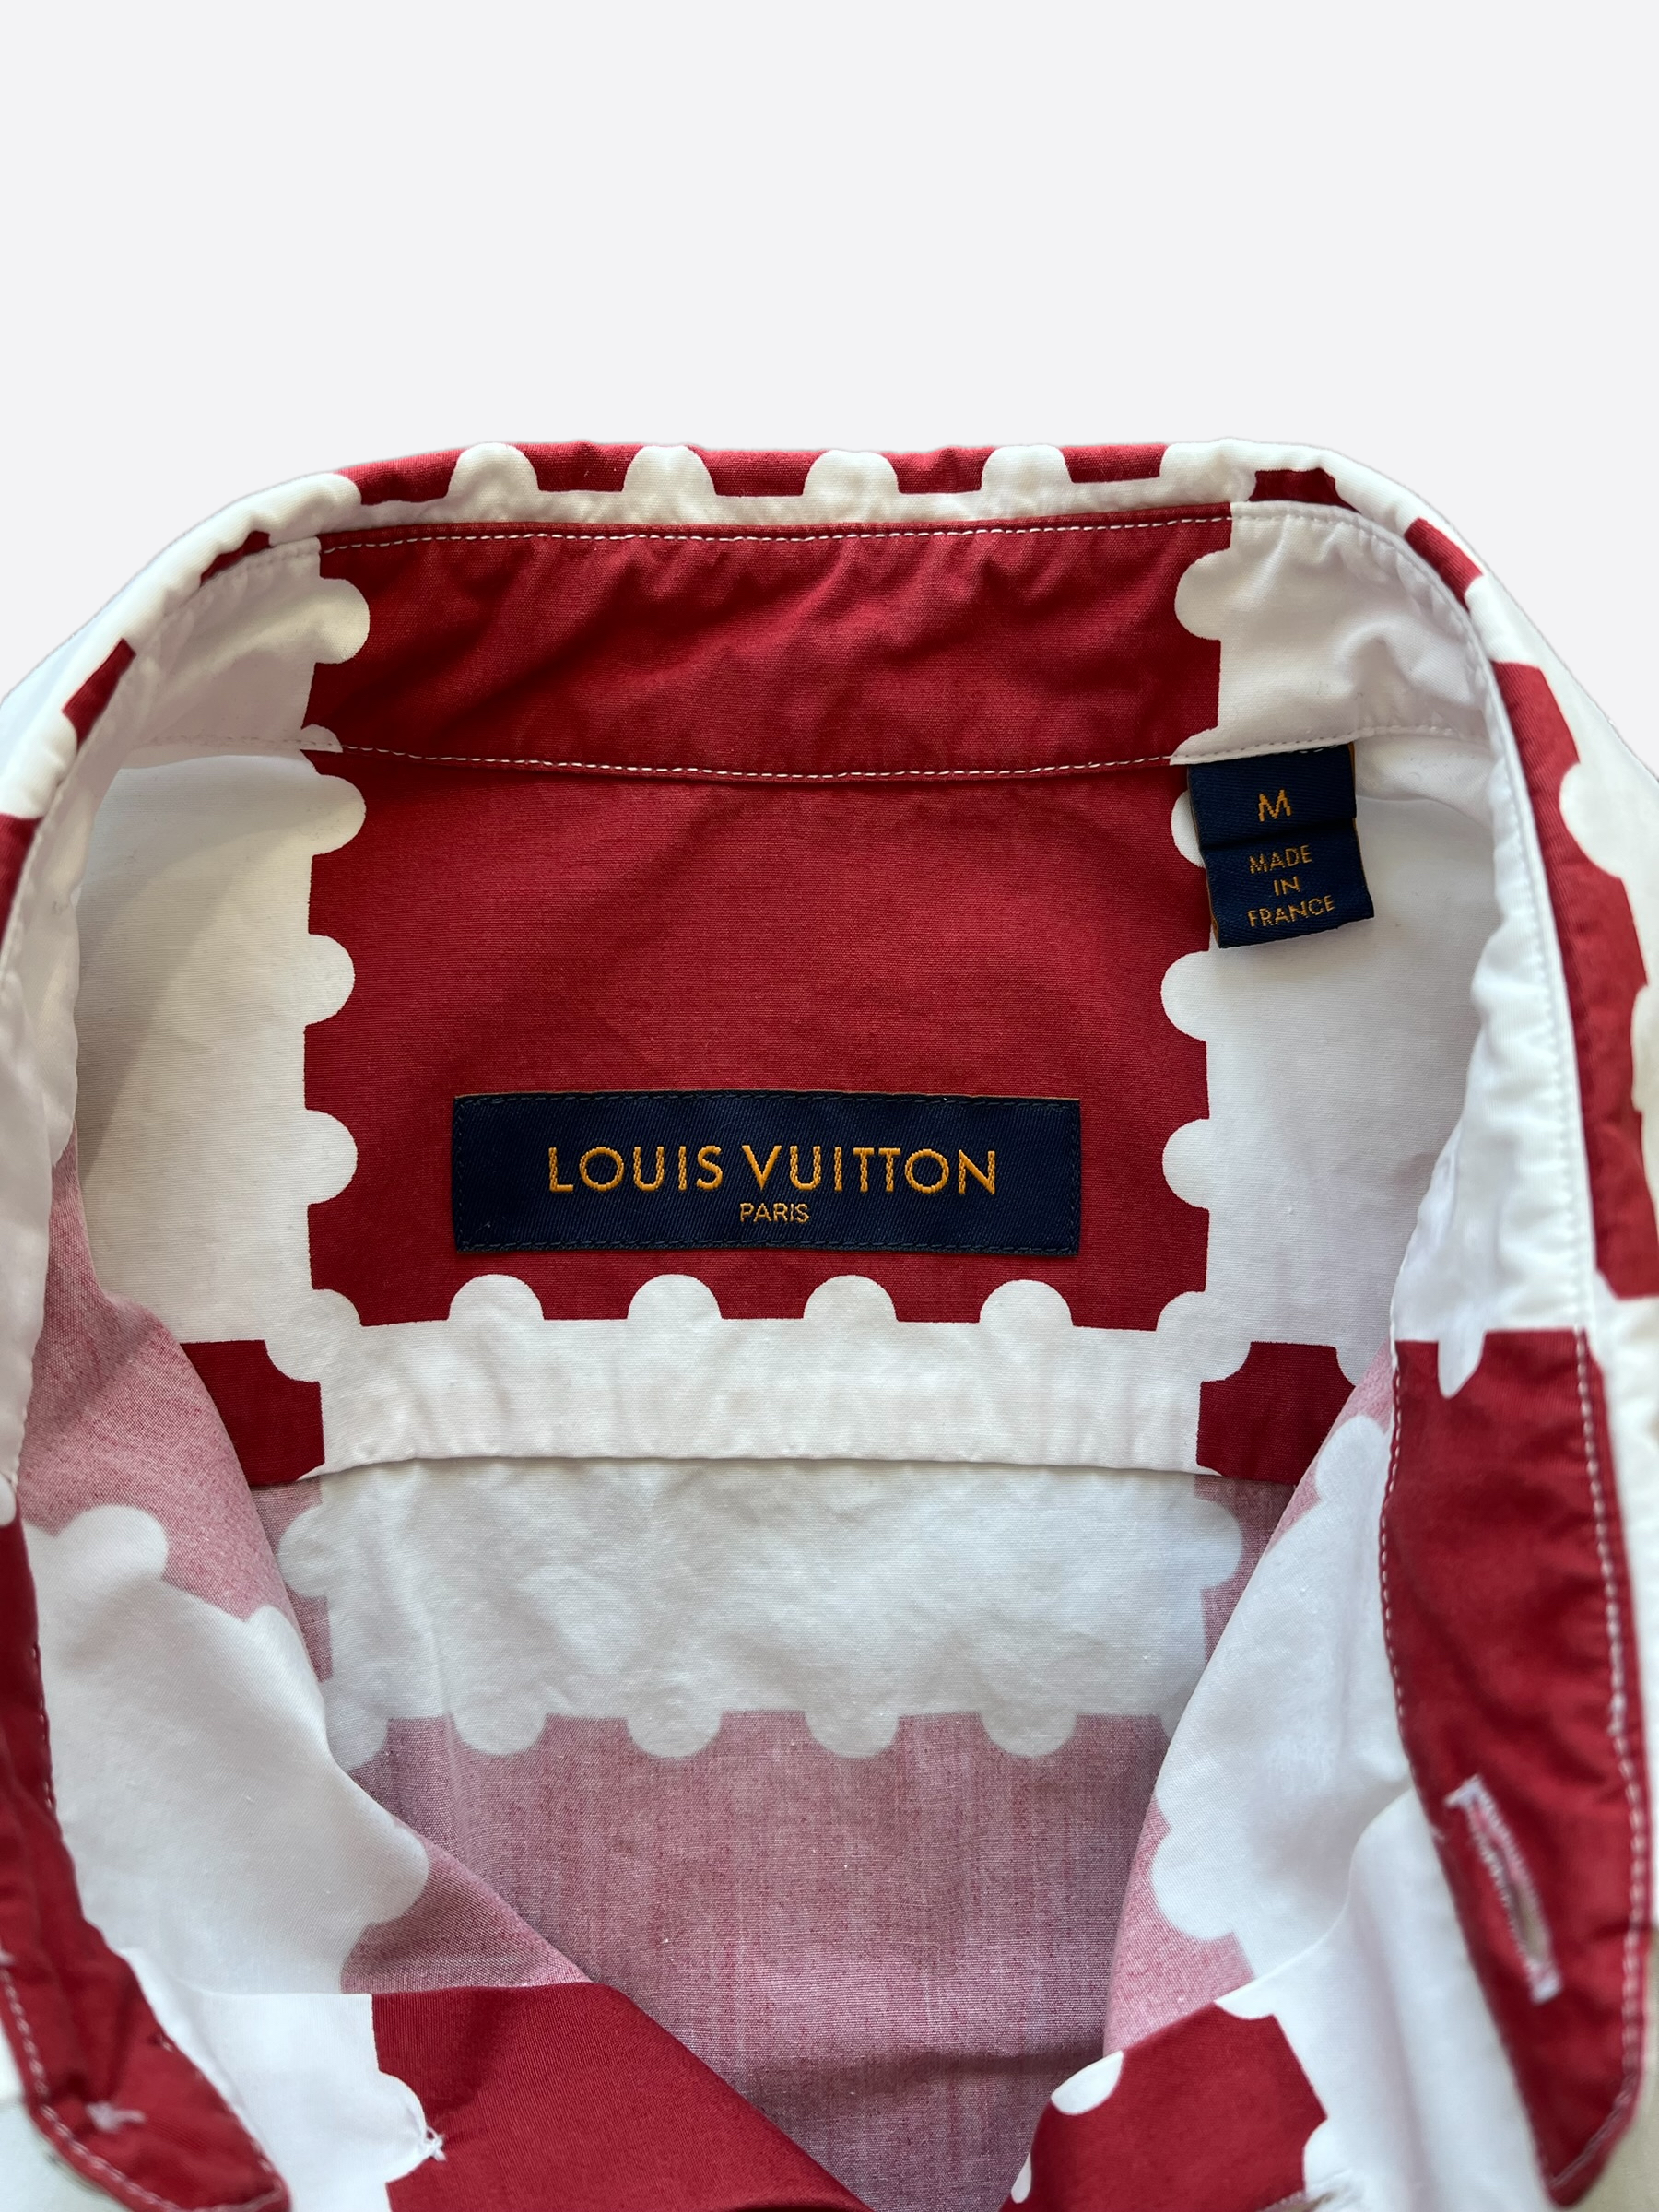 Louis Vuitton Plaid Red White Cotton Womens Blouse Top Button